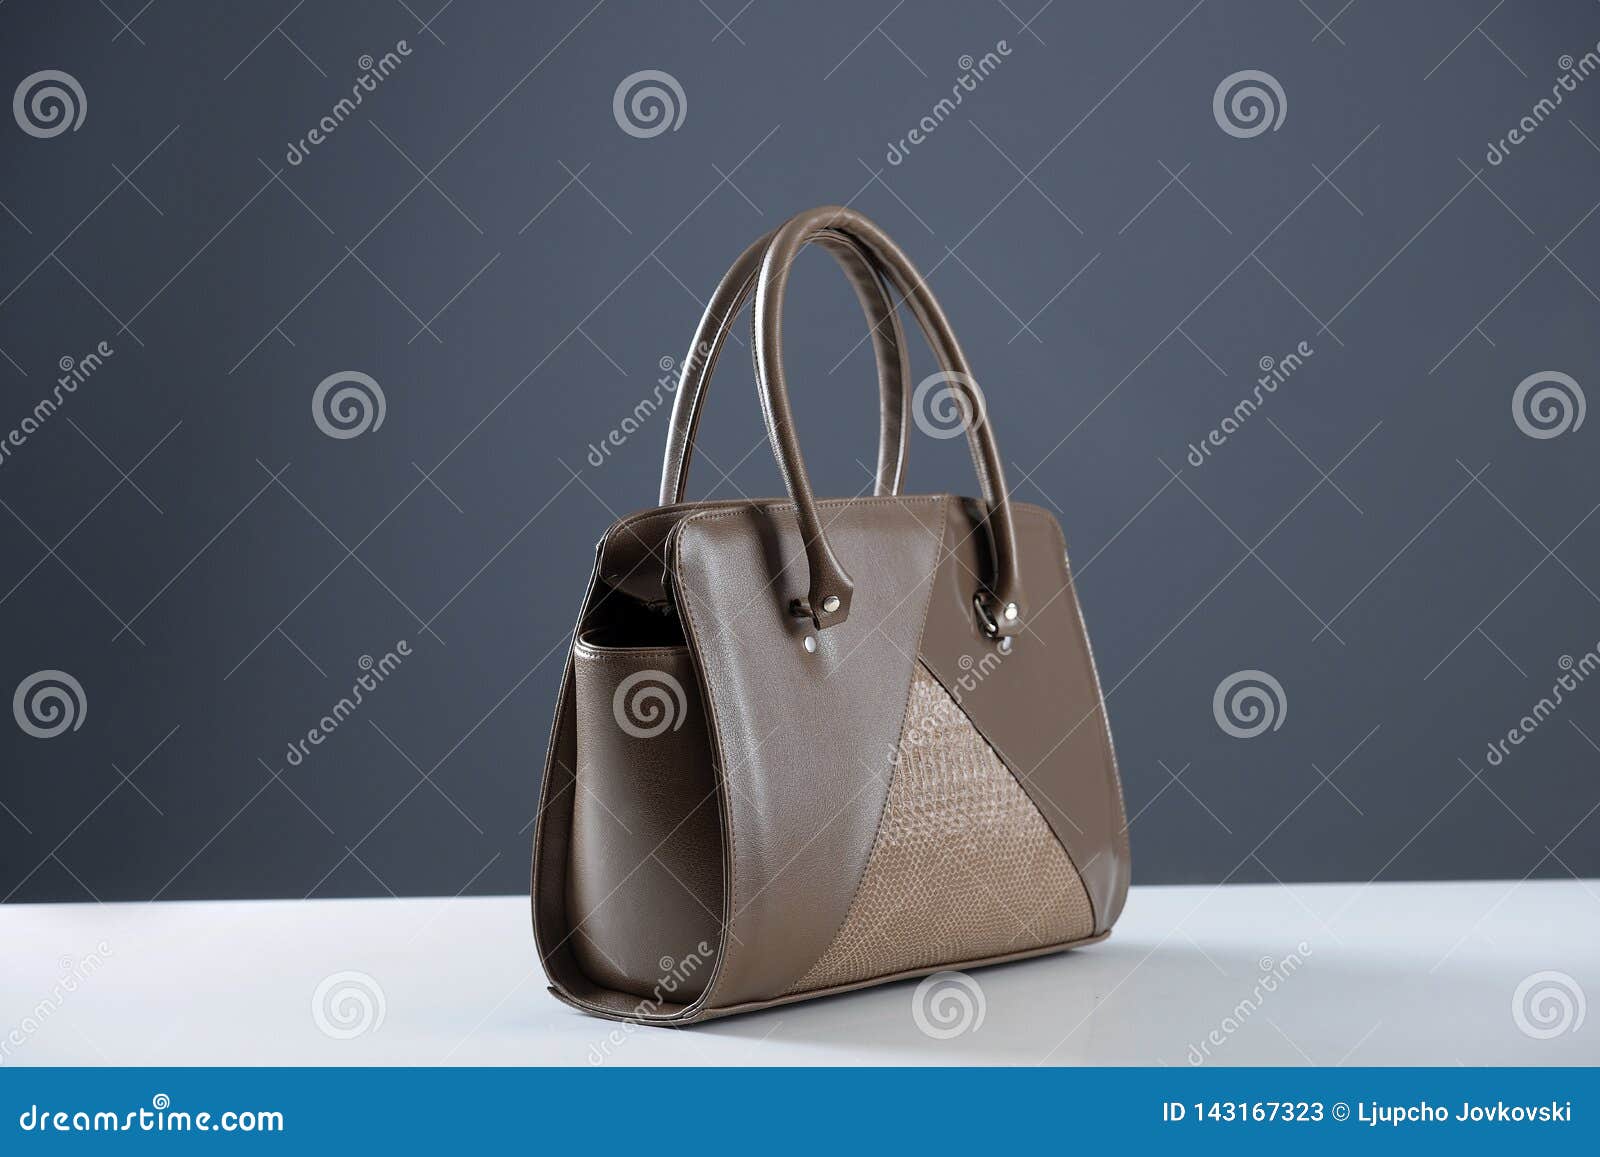 159,837 Leather Bag Women Images, Stock Photos & Vectors